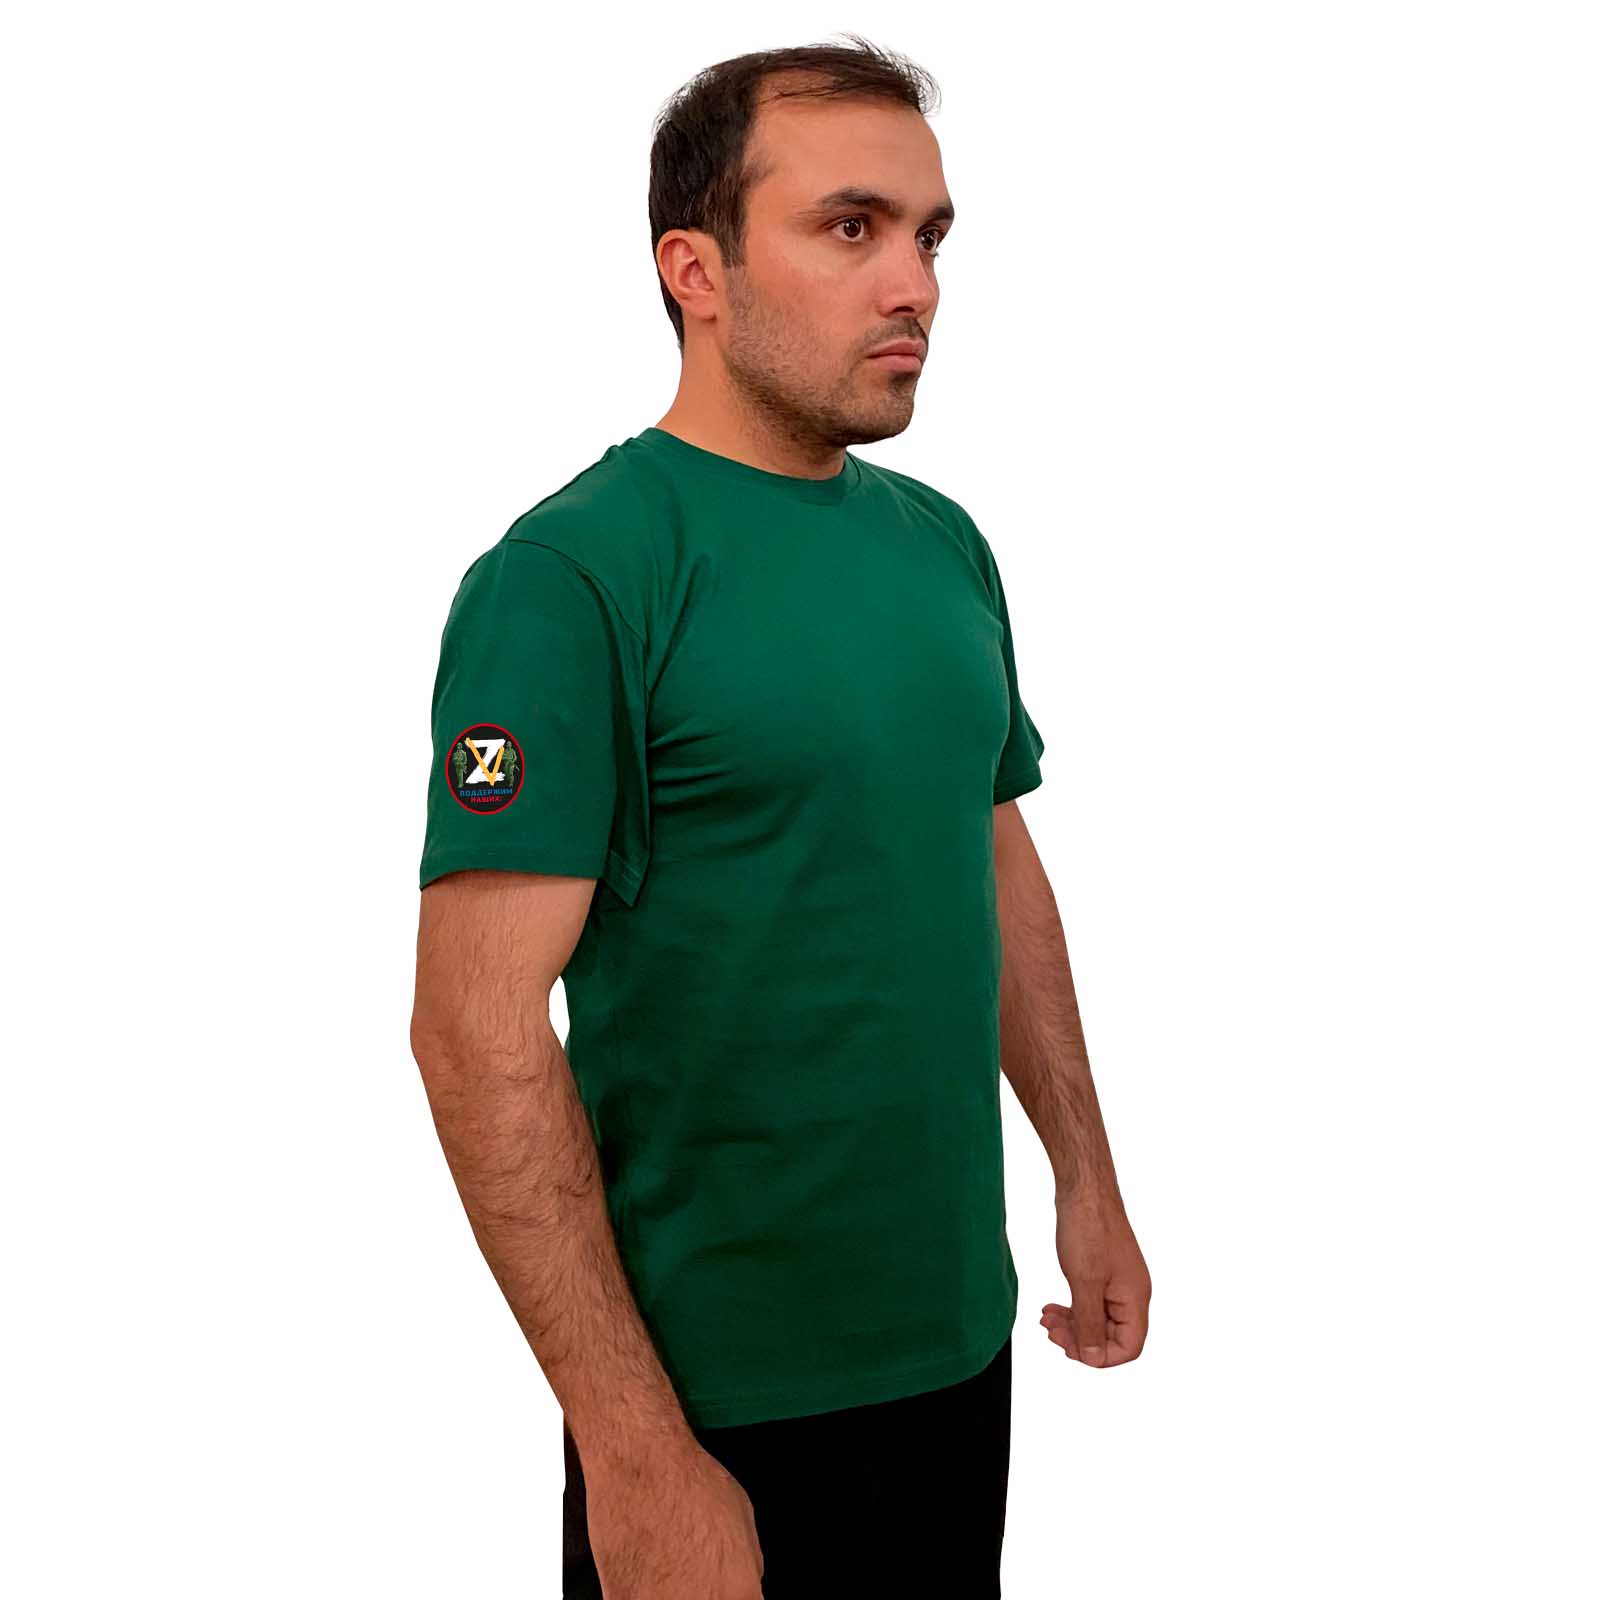 Зелёная футболка с термопринтом ZV на рукаве